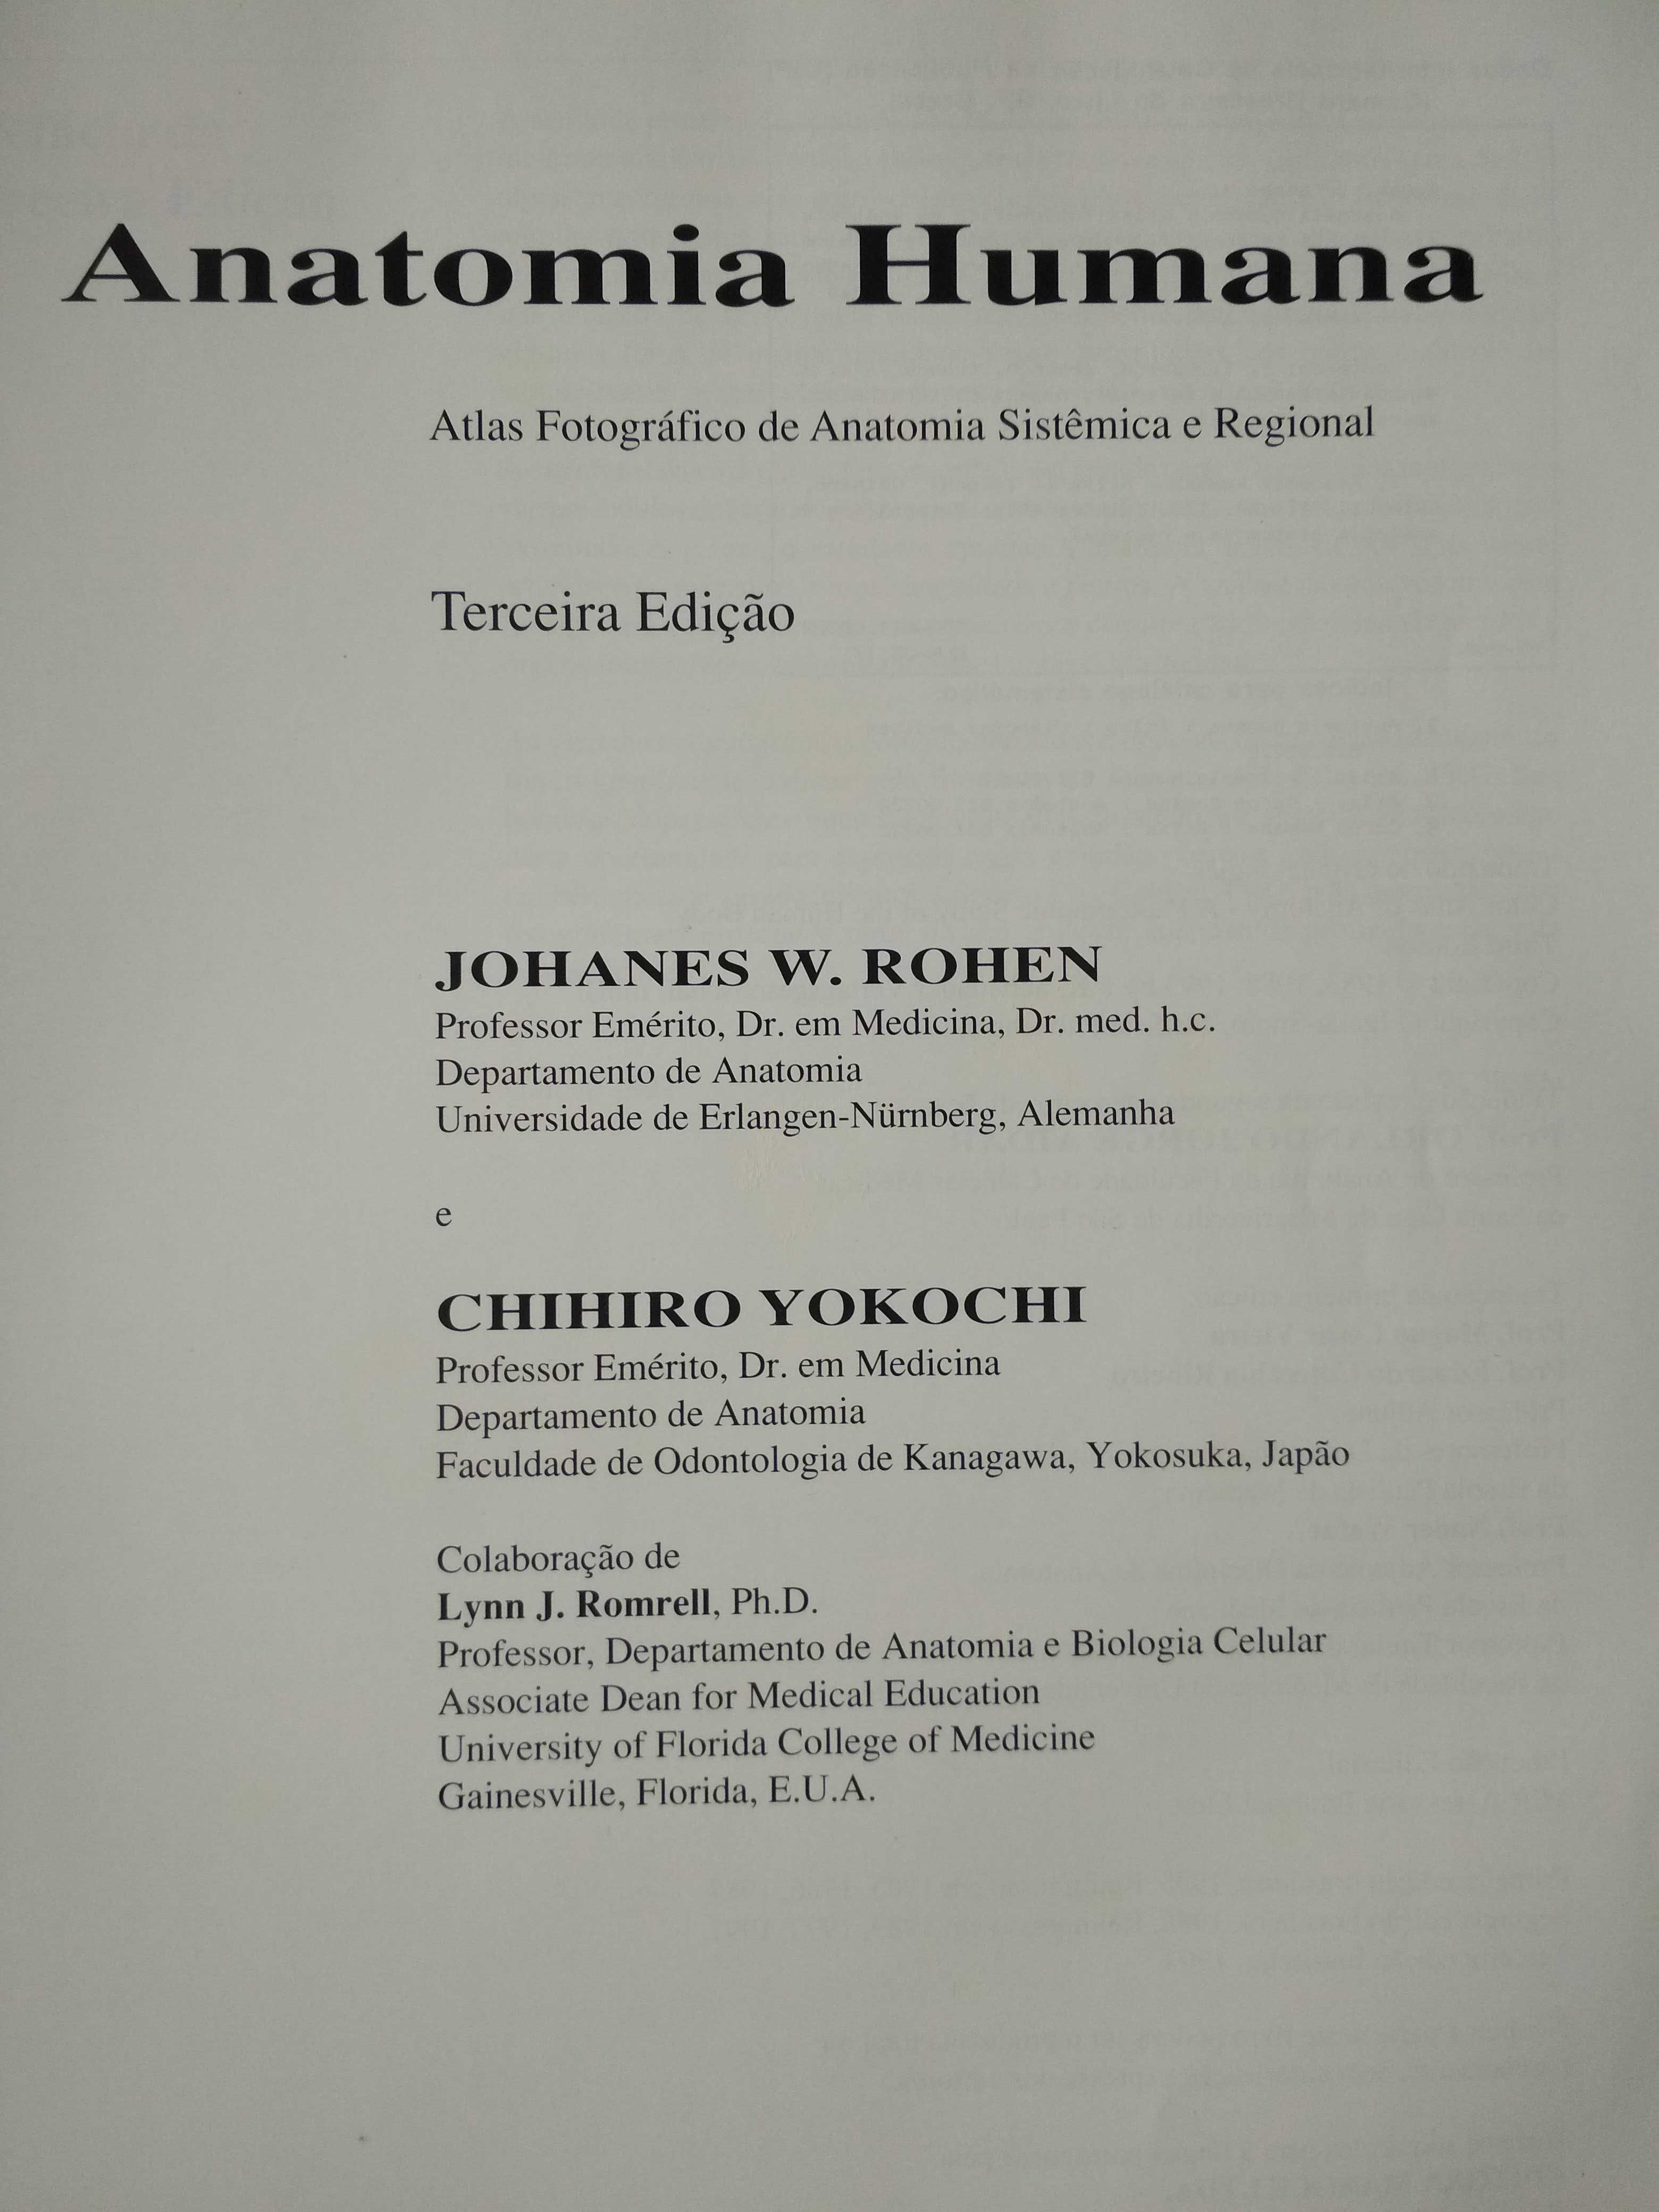 Anatomia Humana - Editora Manole